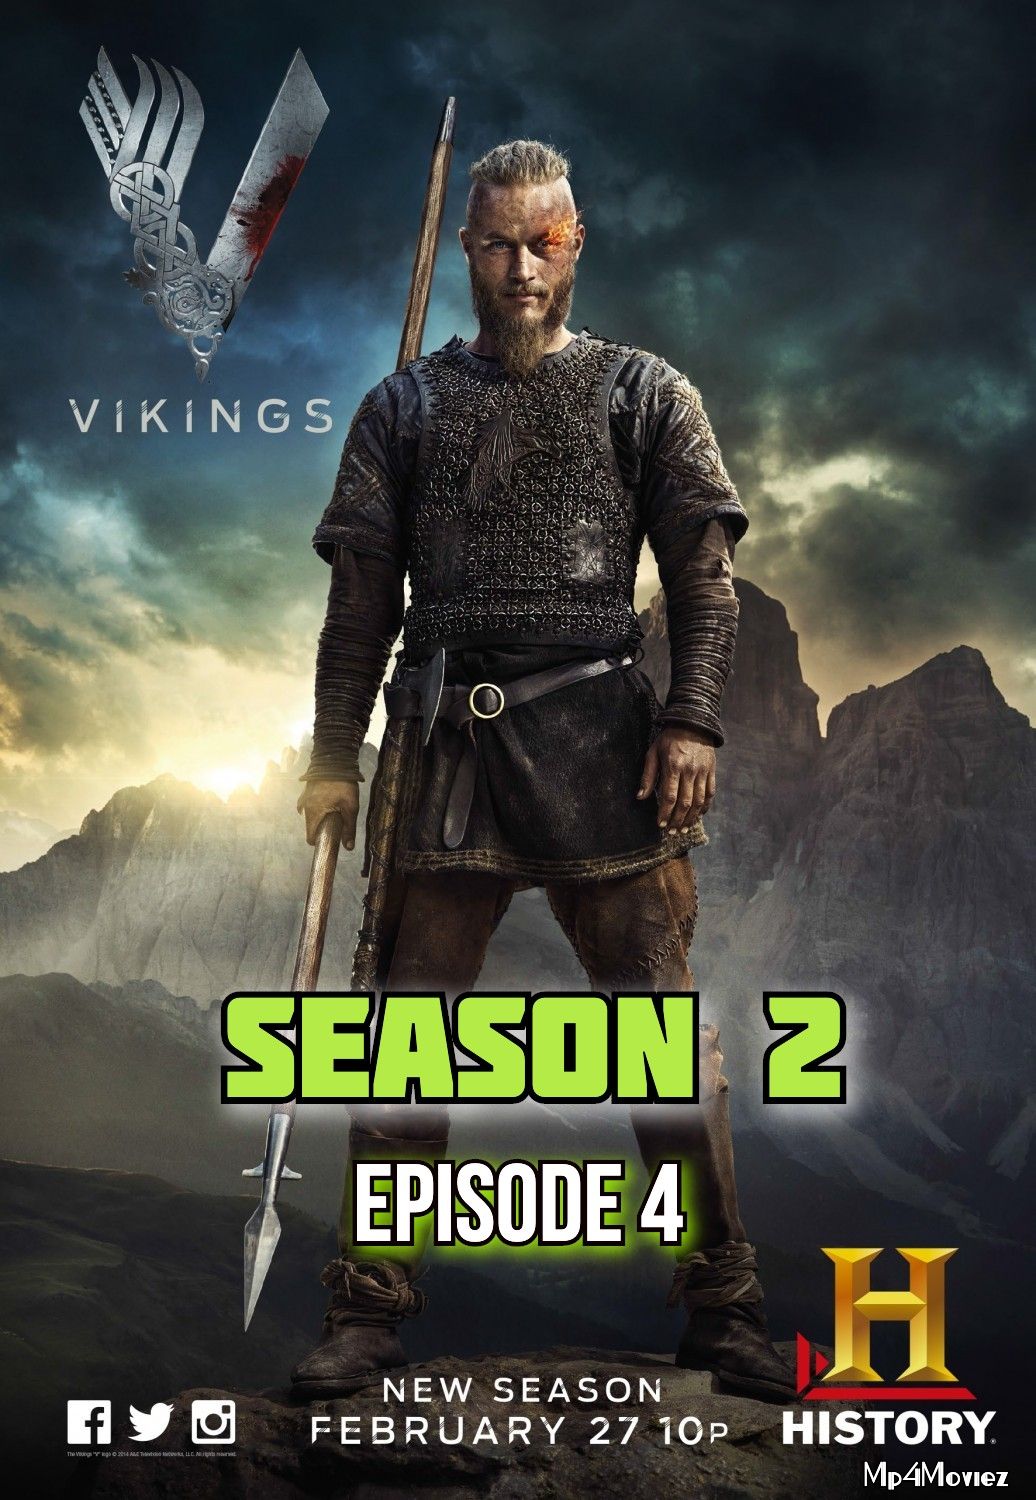 Vikings S02E04 (Eye for an Eye) Hindi Dubbed download full movie